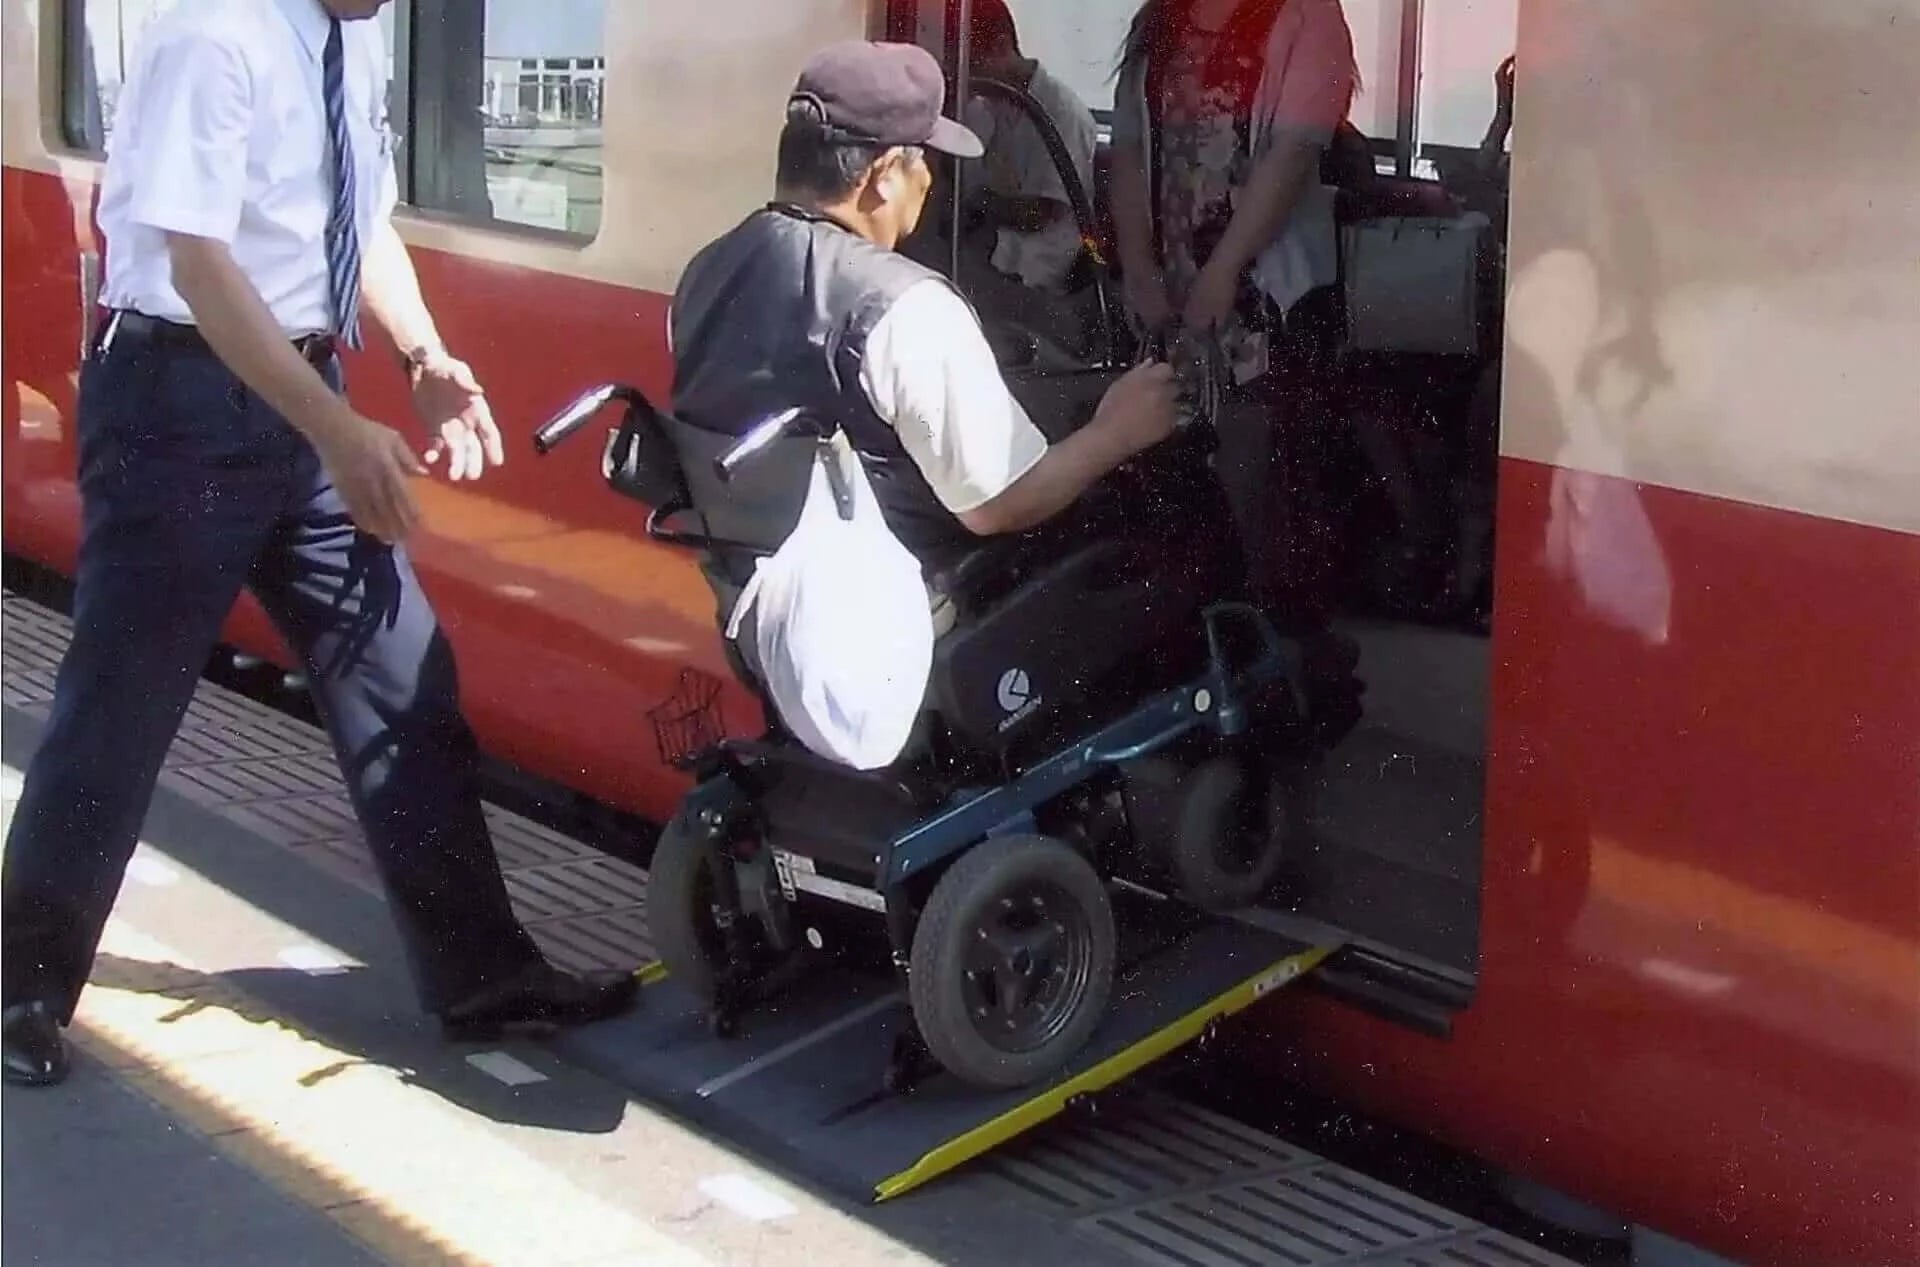 guldmann stepless fiberglass ramp being used by man boarding a train